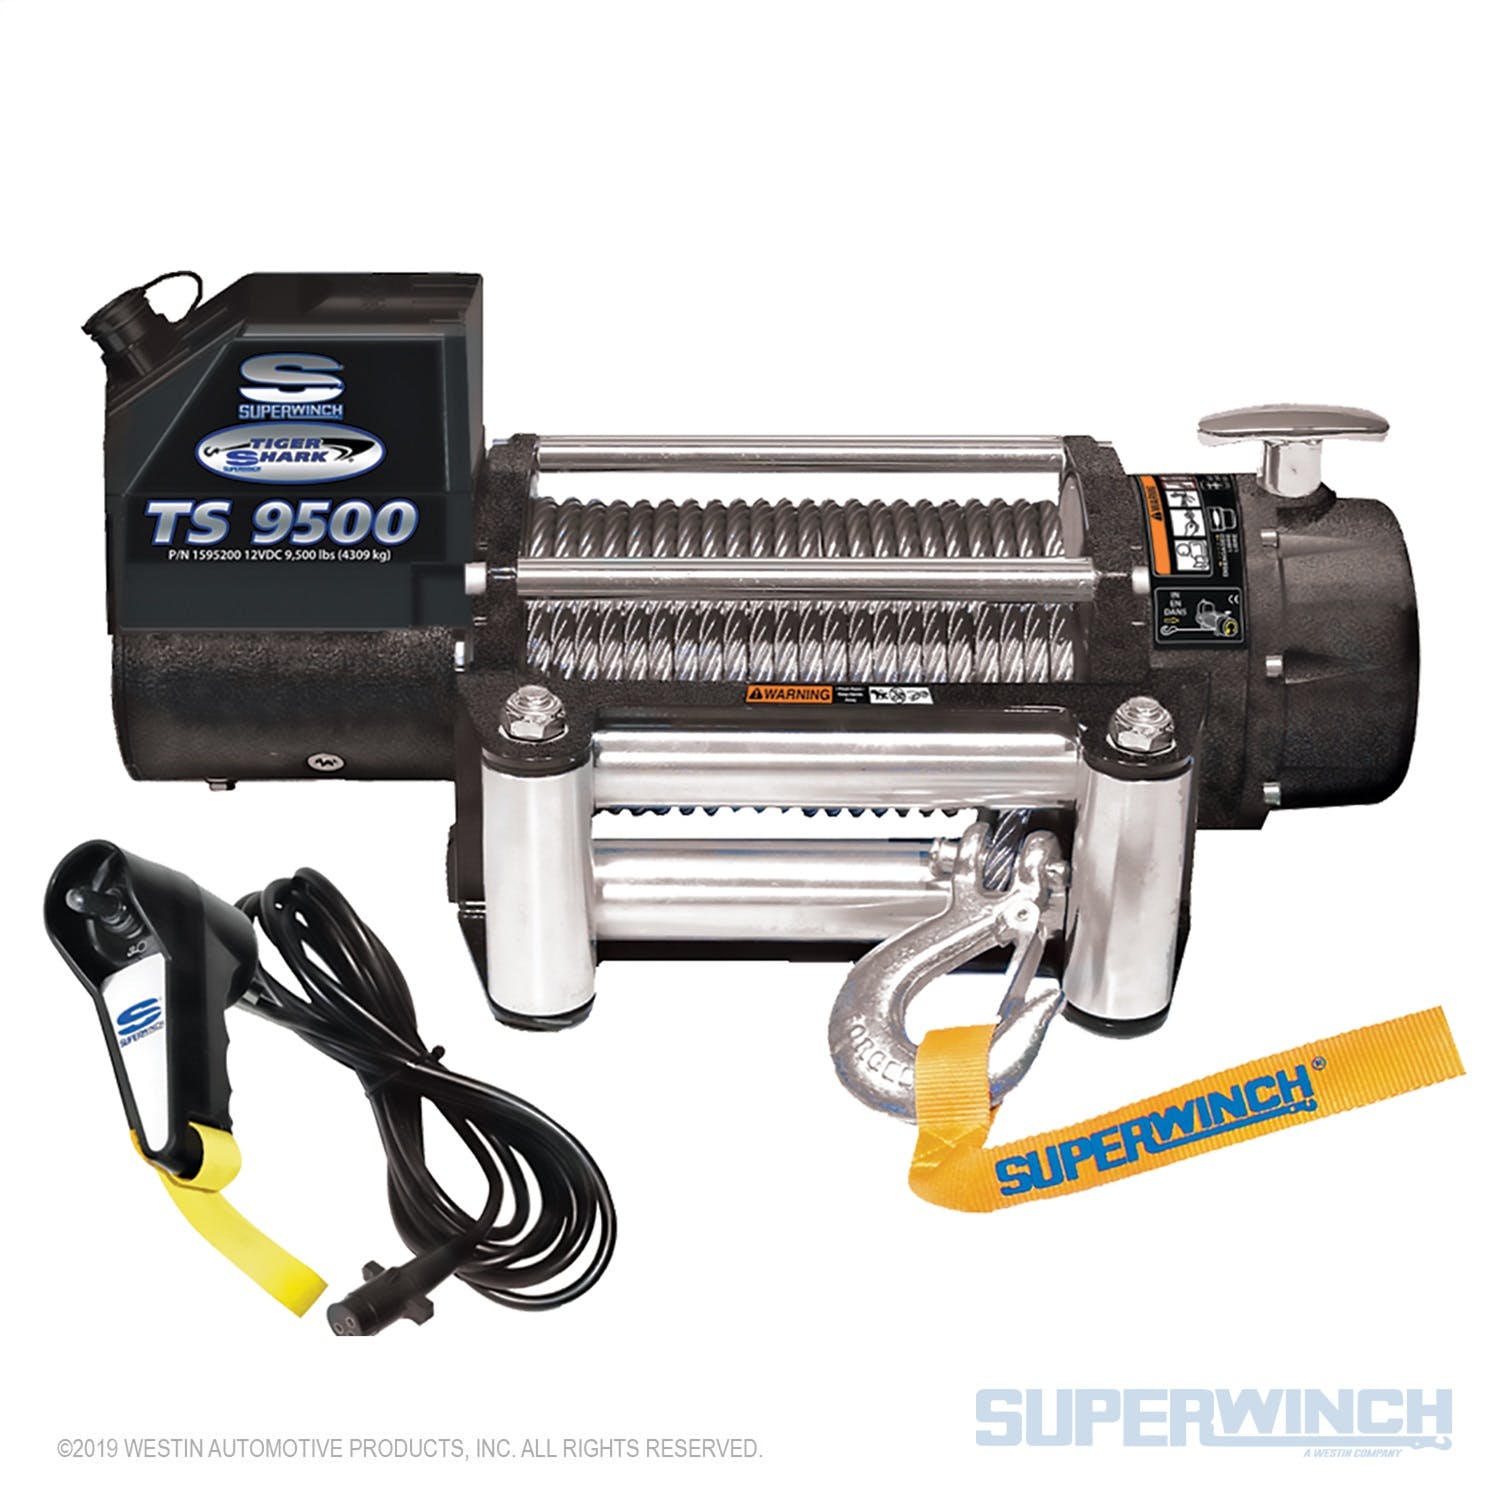 Superwinch 1595200 Tiger Shark 9500 Winch